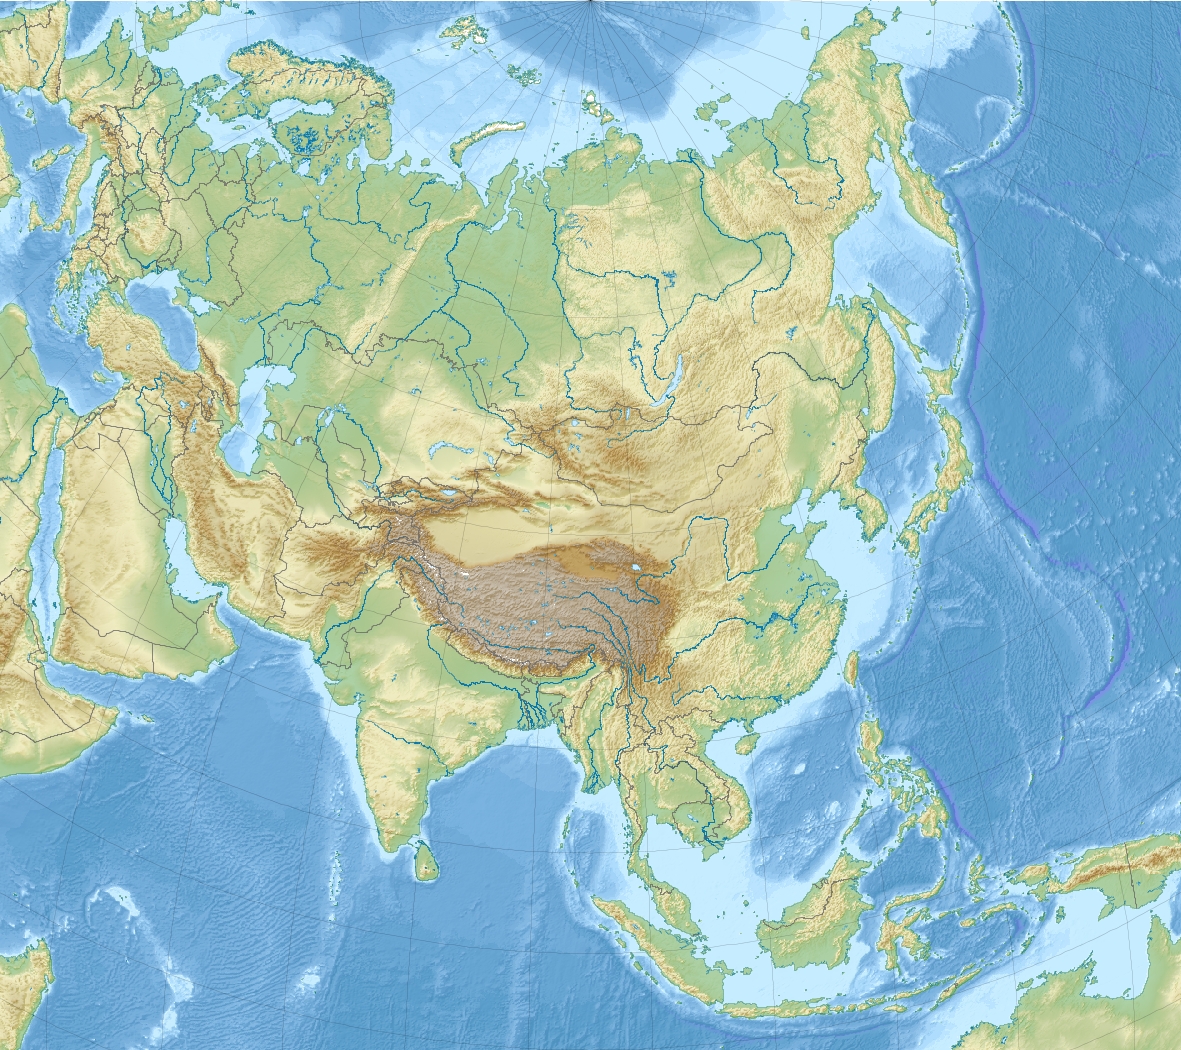 Asia - topographic • Map • PopulationData.net